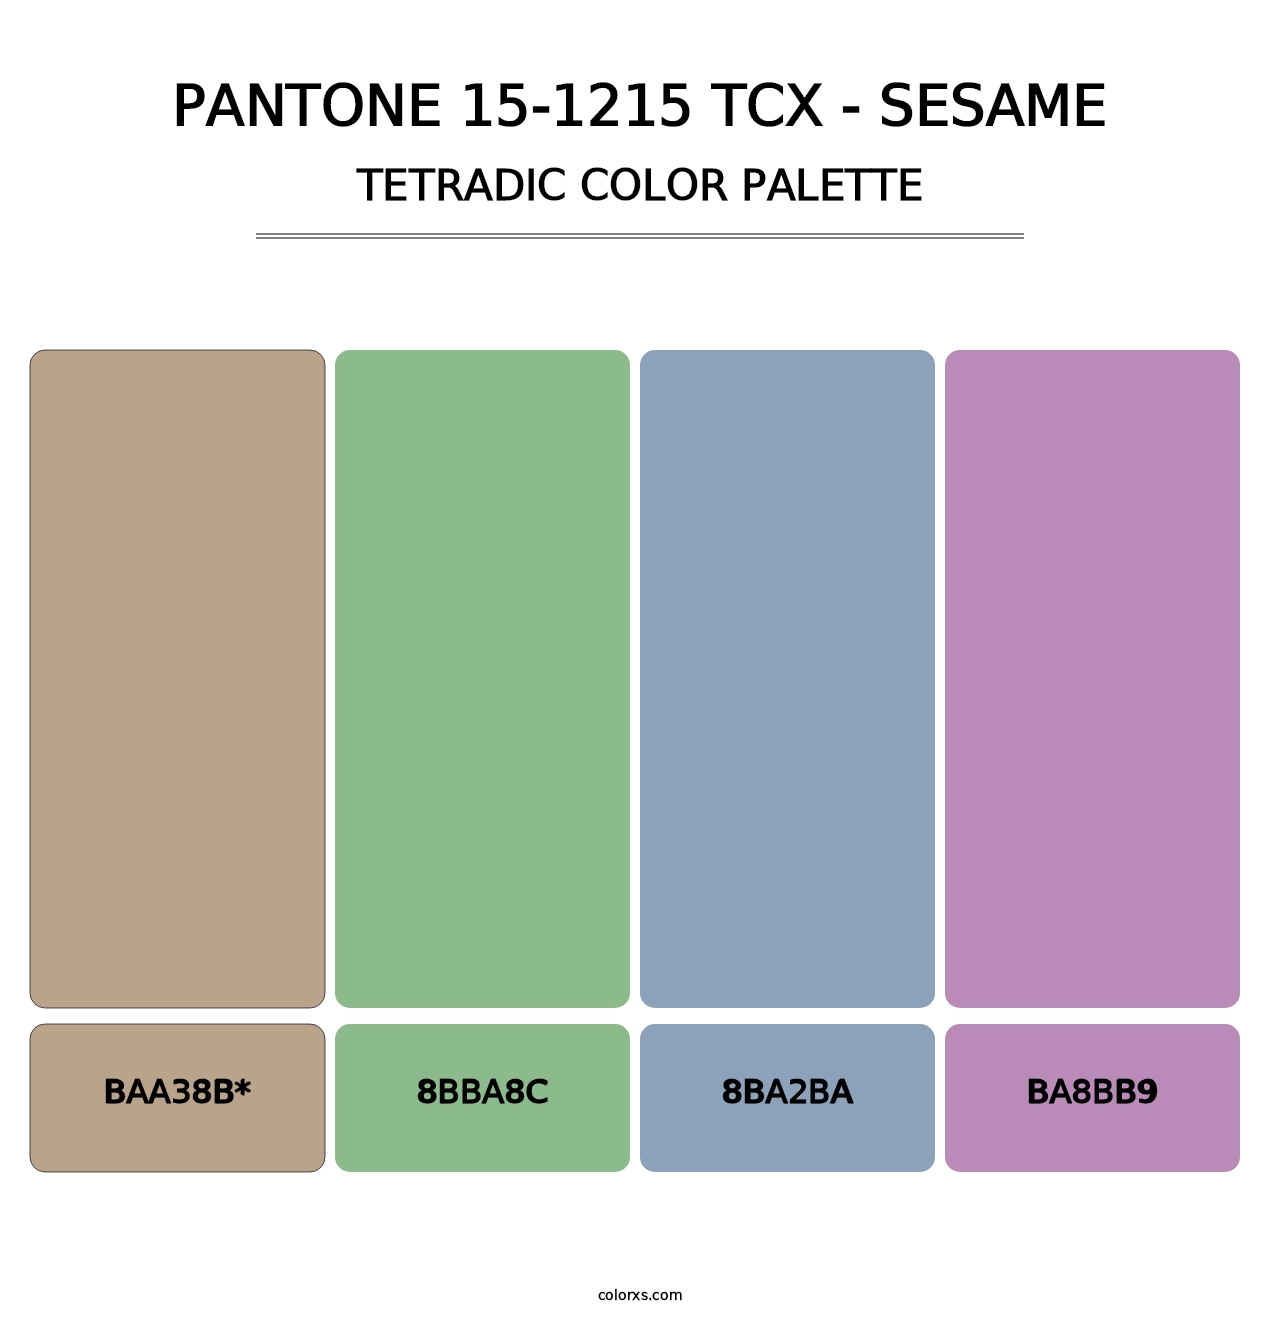 PANTONE 15-1215 TCX - Sesame - Tetradic Color Palette